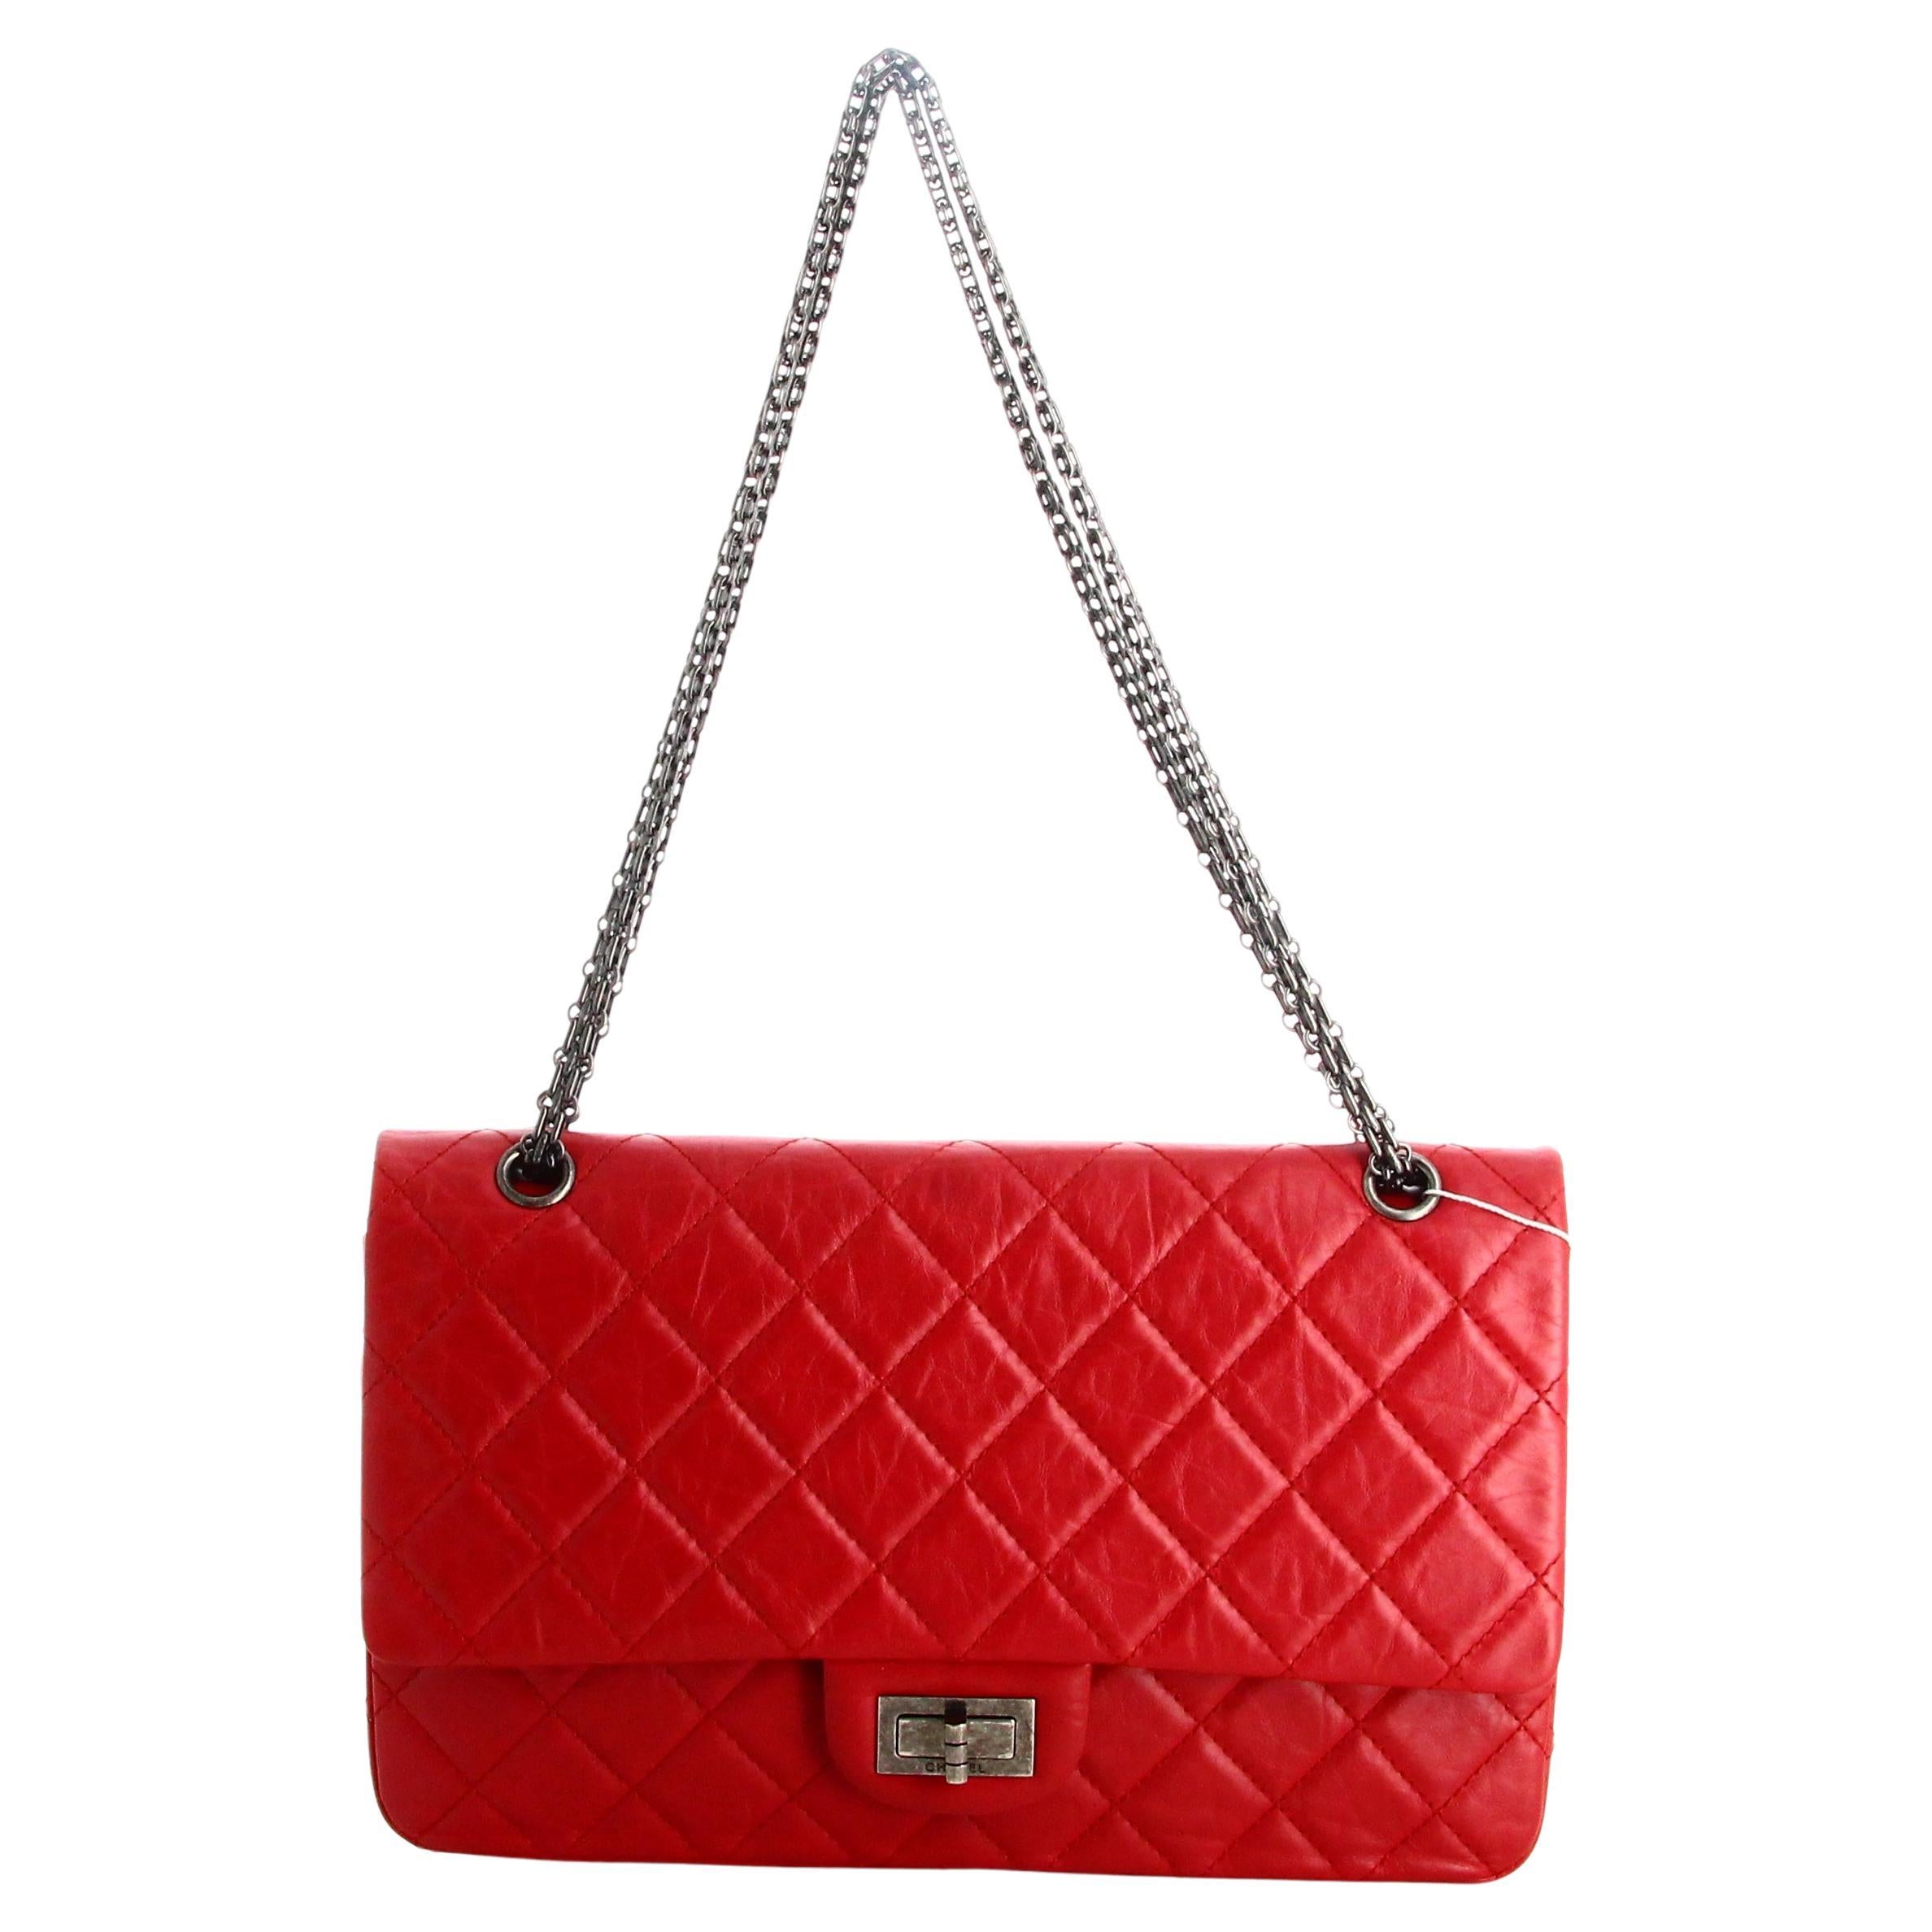 2011 Chanel Reissue Handbag 2.55 Calfskin Double Flap For Sale